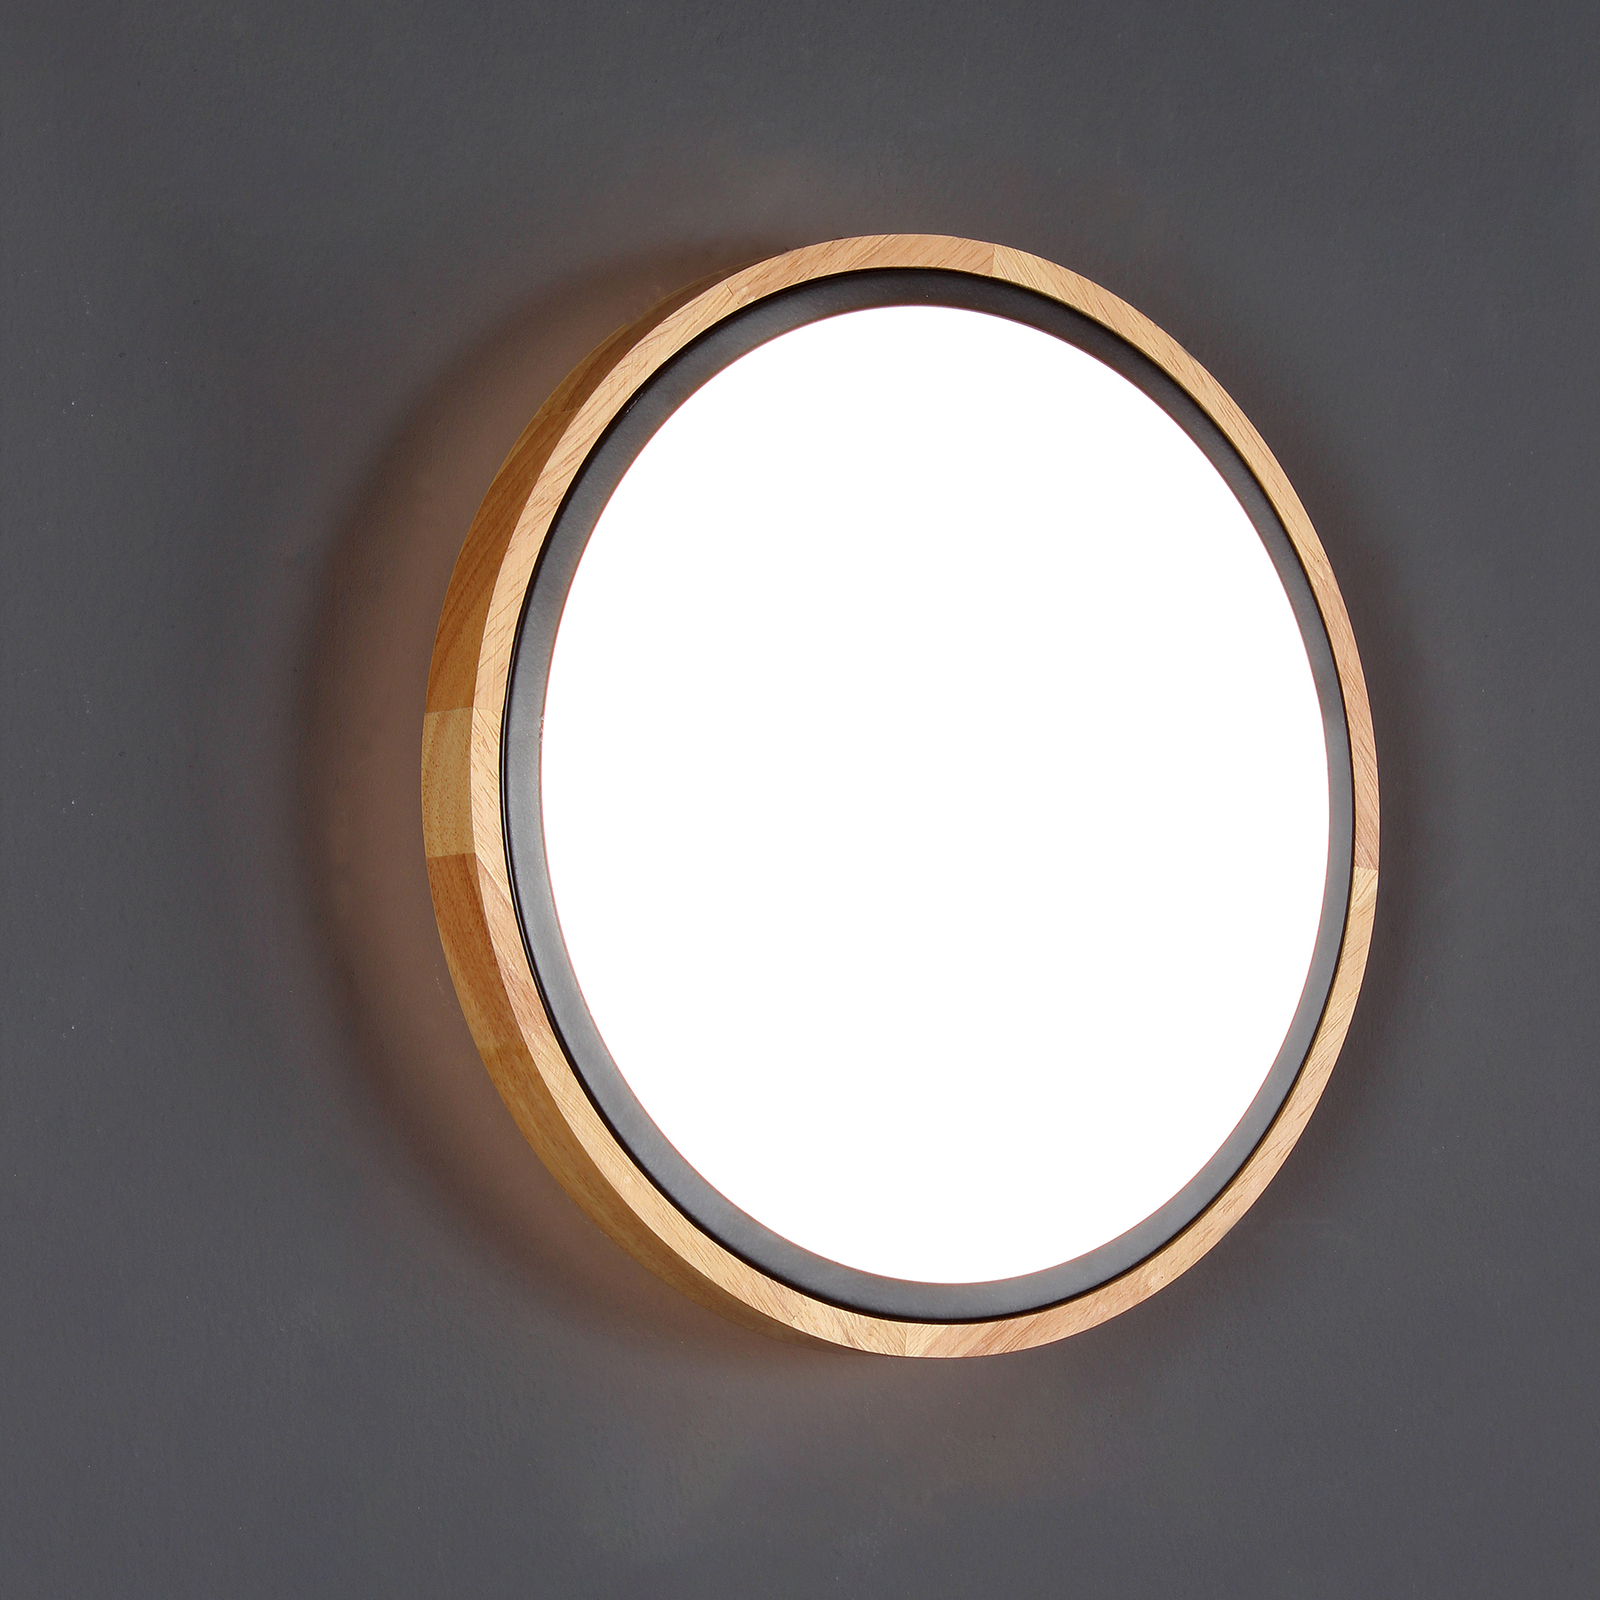 Solstar LED plafondlamp met houtdecor Ø 30,7 cm